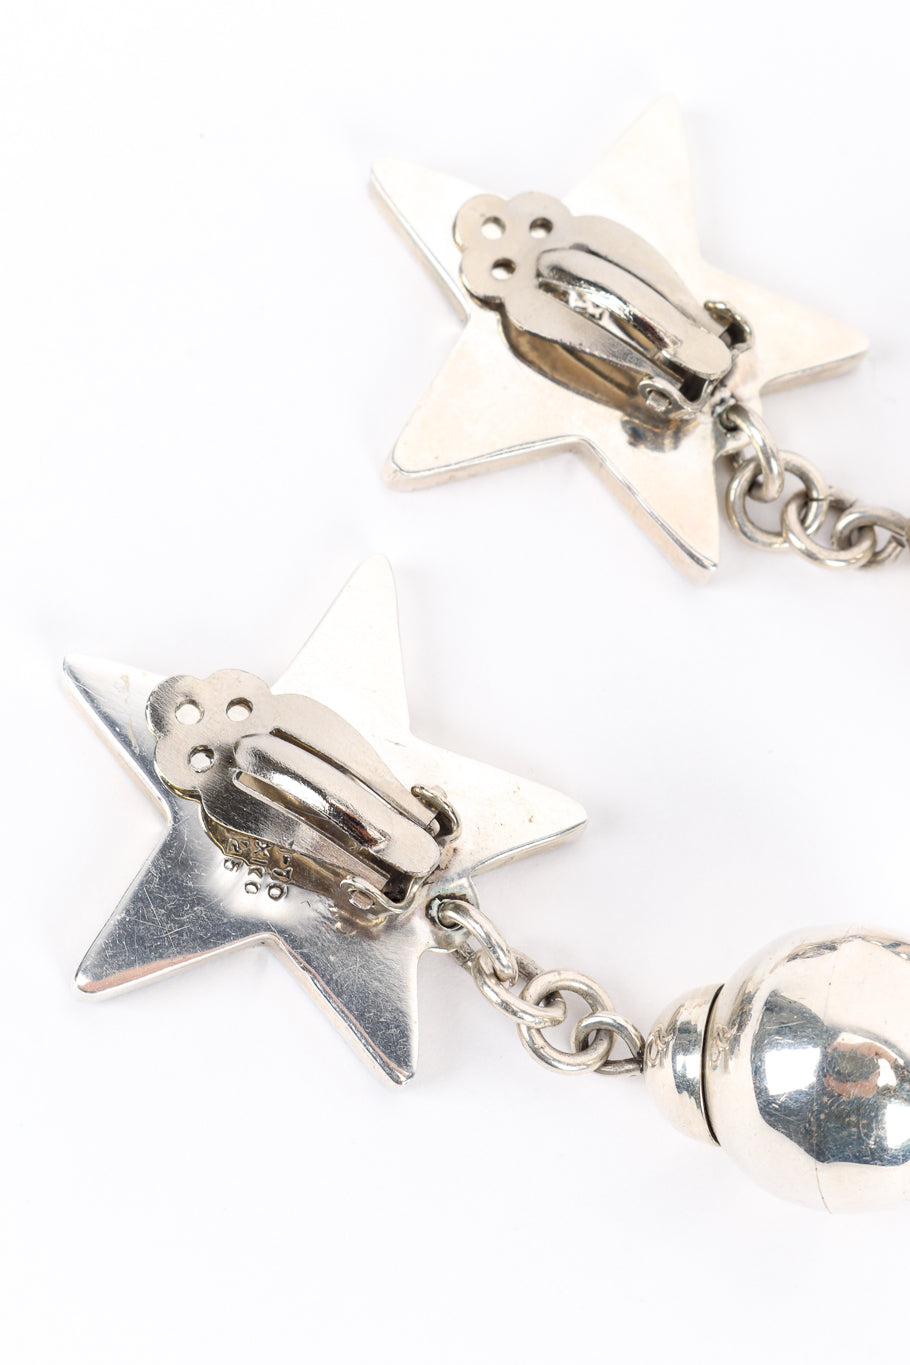 Vintage Taxco Sterling Star Bauble Earrings back post closeup @recess la